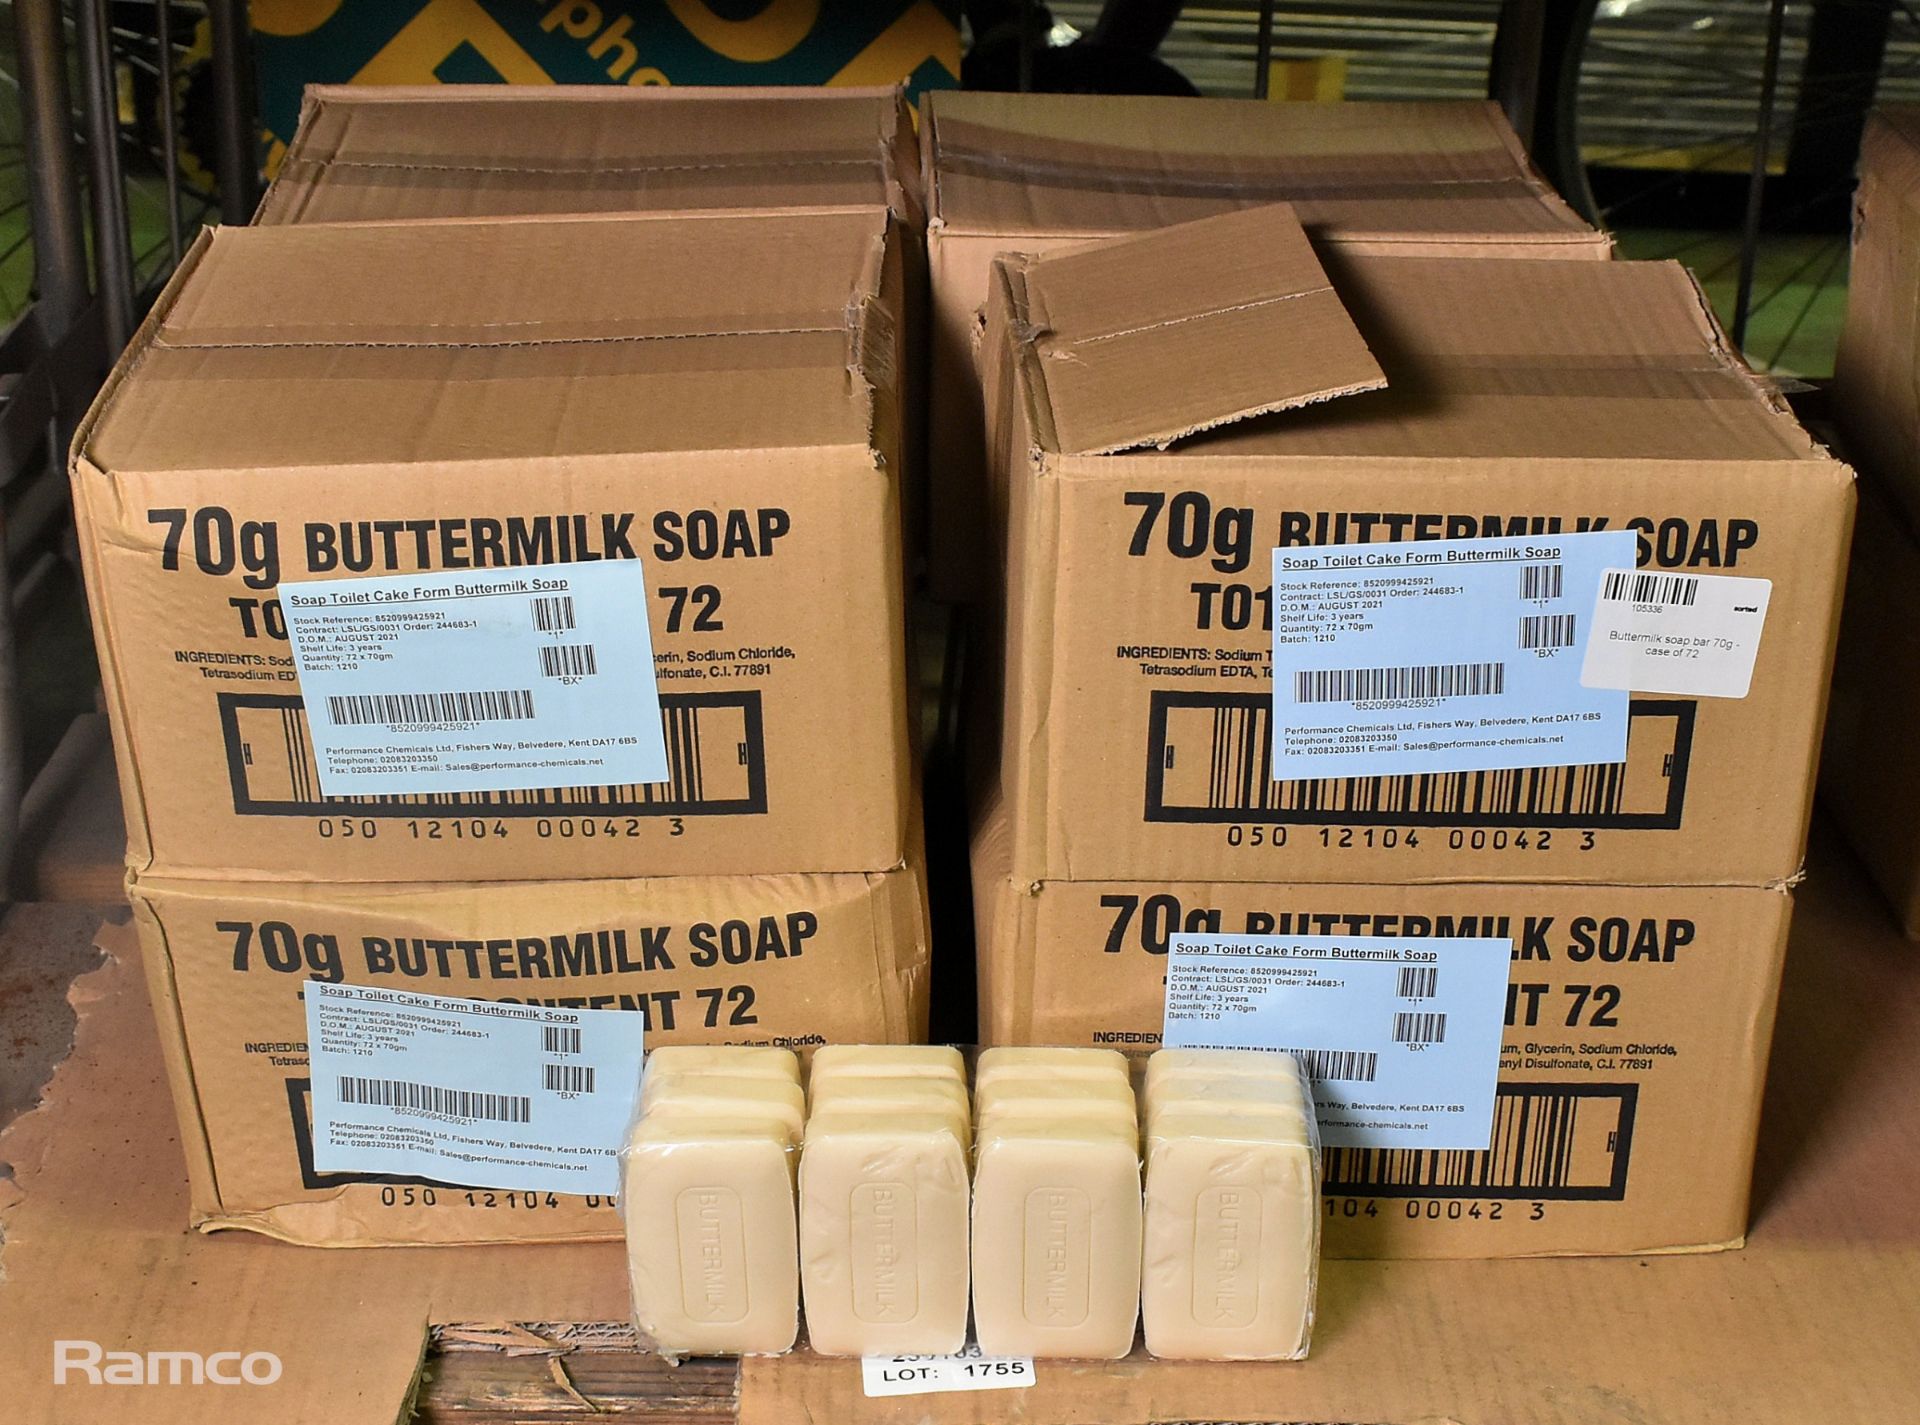 8x boxes of Buttermilk soap bar 70g - 72 units per box